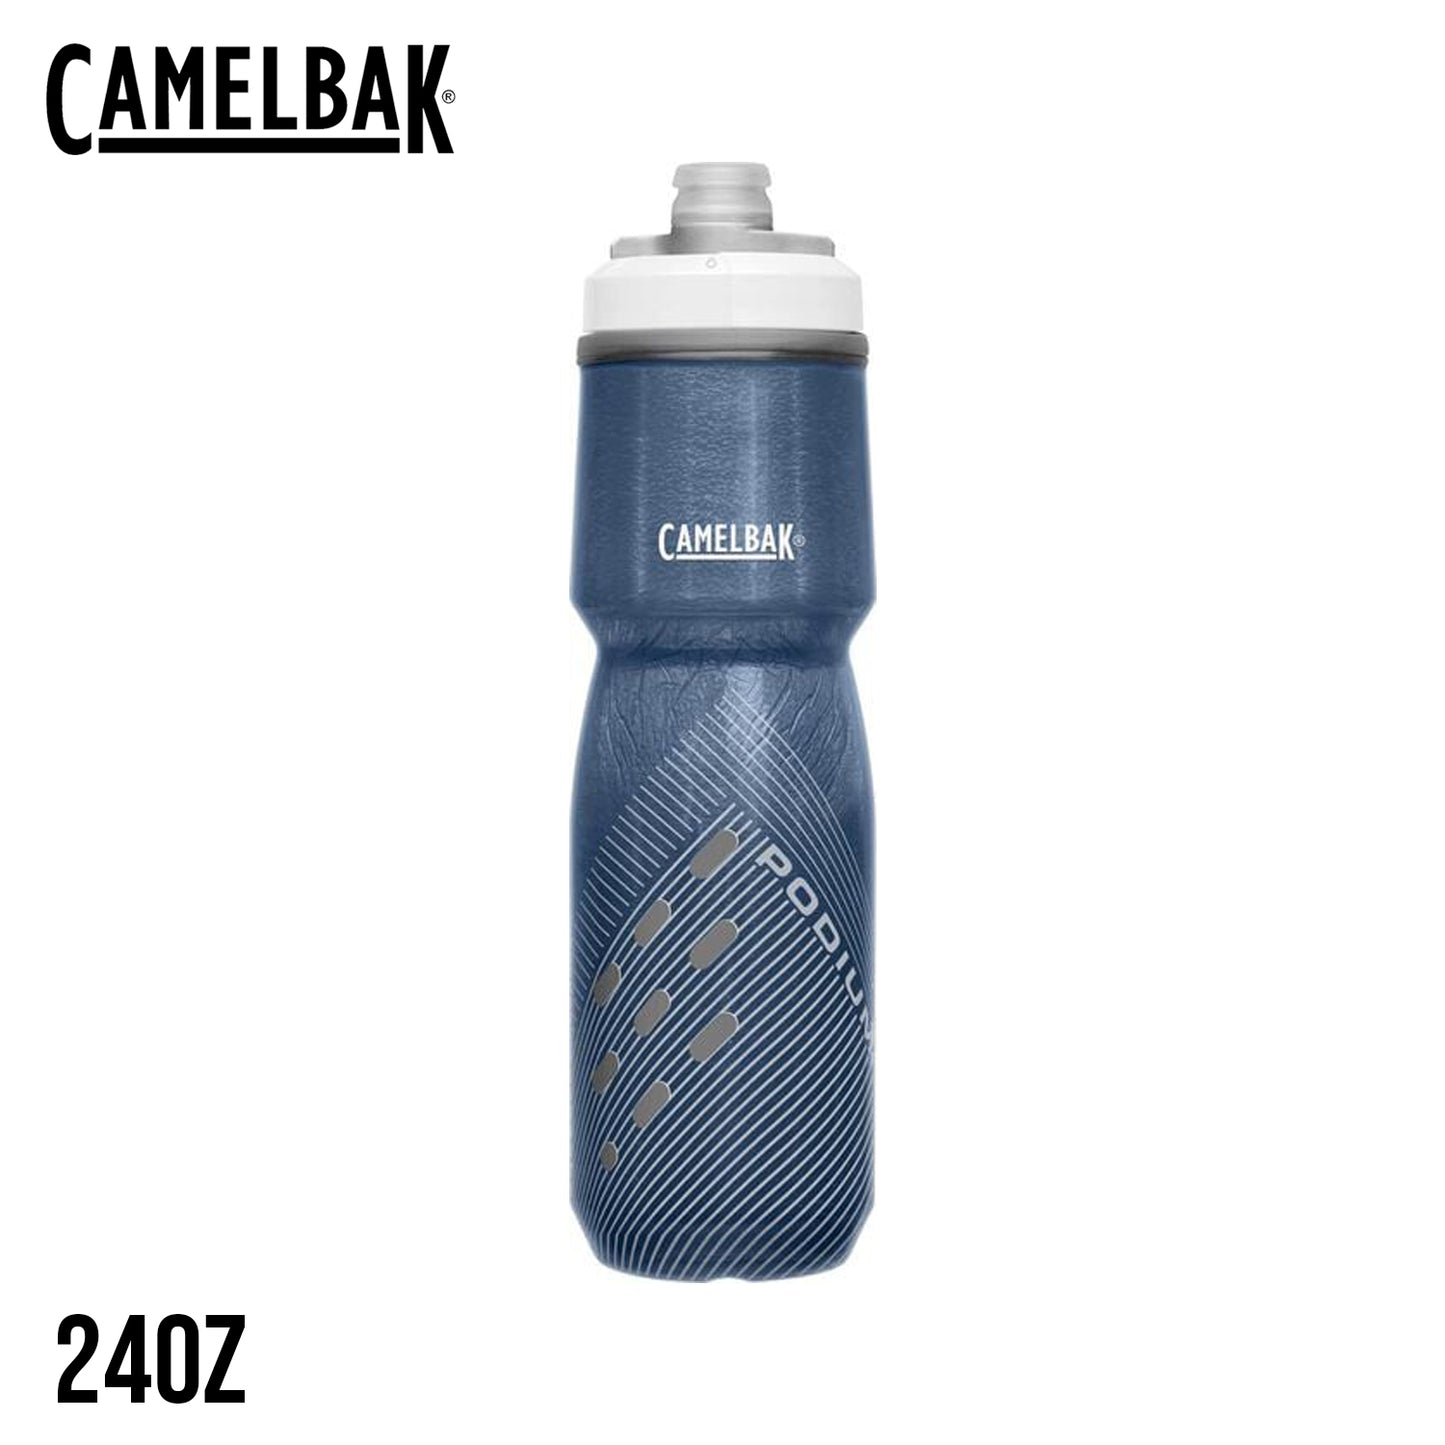 CamelBak Podium Chill Bike Bottle - Navy Perforated